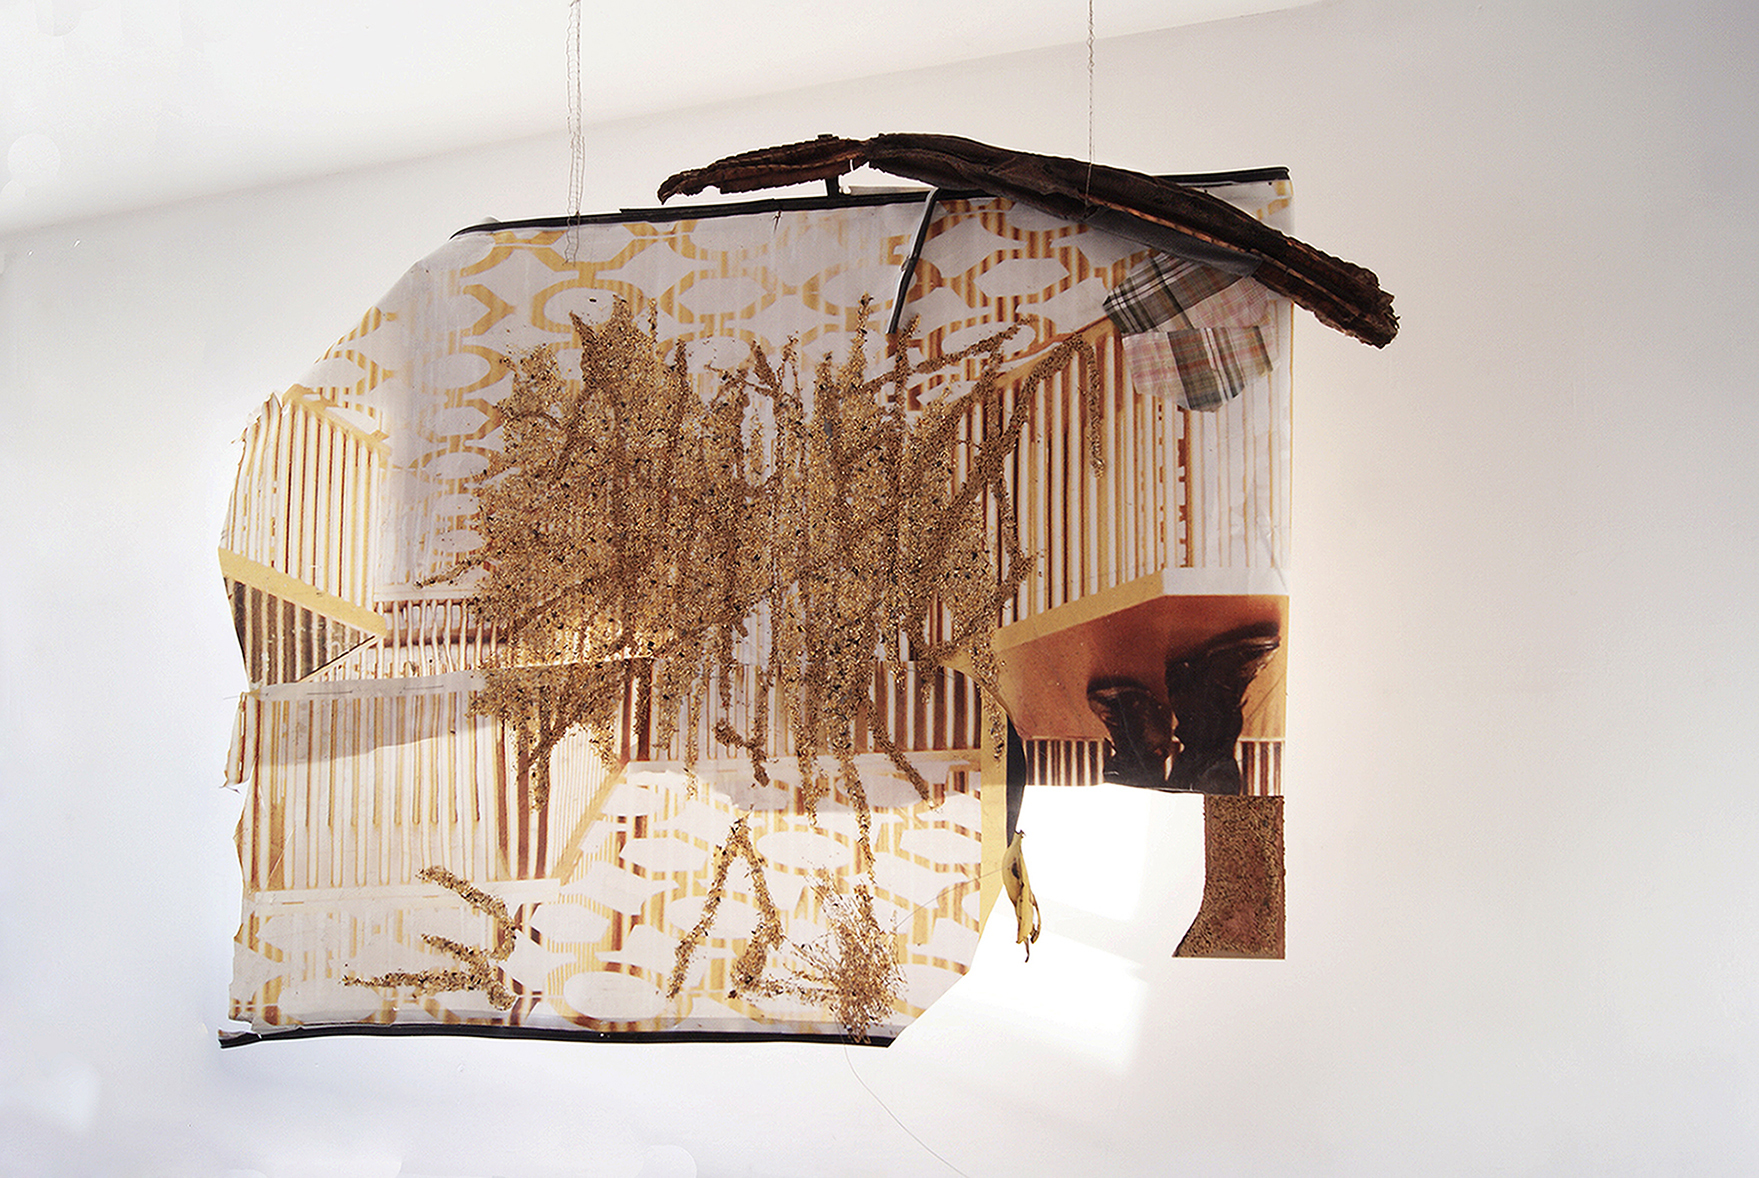 Klára Švandová, Ondřej Doskočil. Medium: installation, bird grain, clay, recycled materials - banner, clothes, banana, cactus